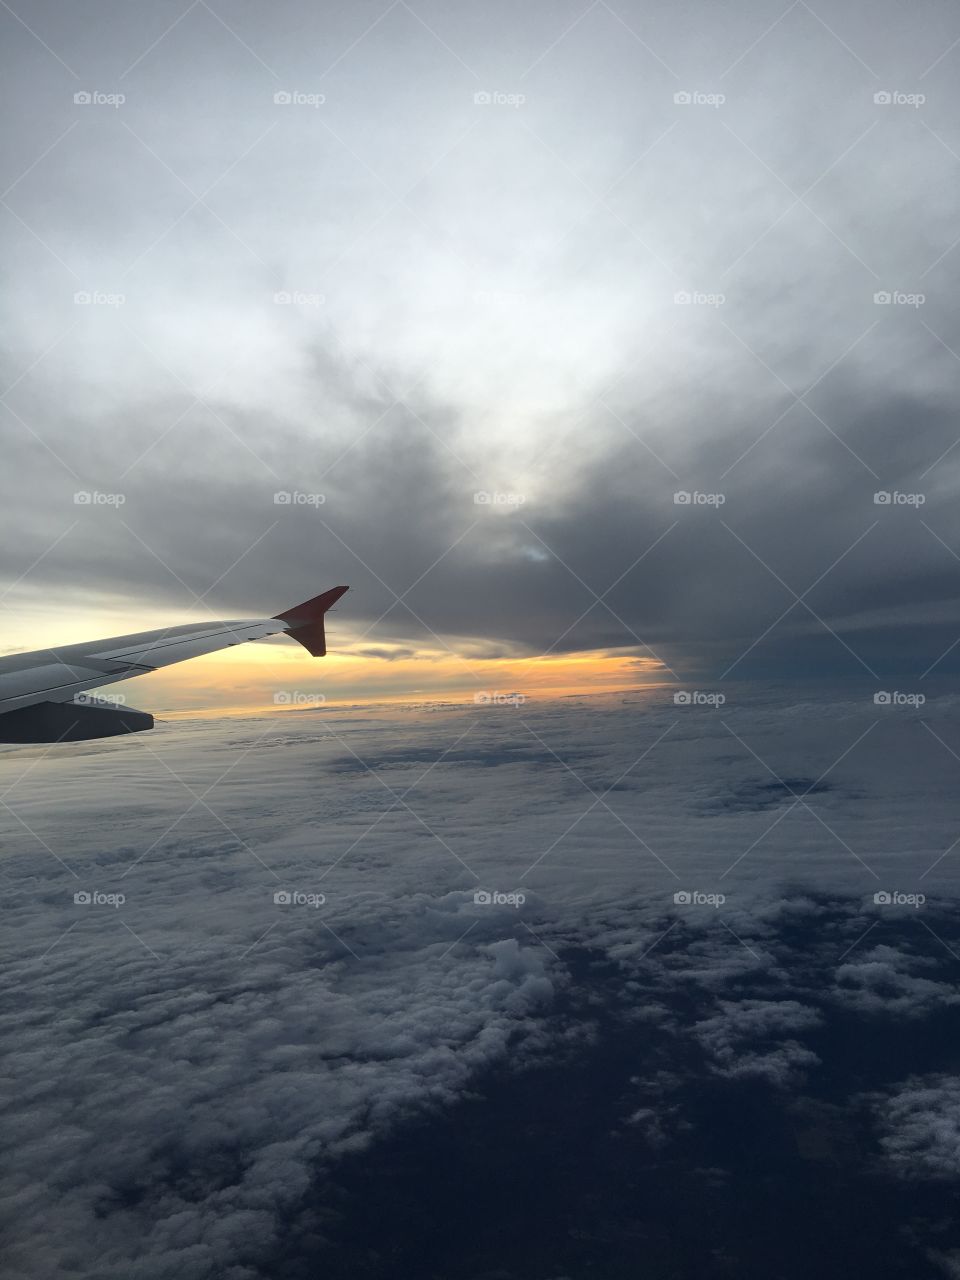 Sunrise from airplane window